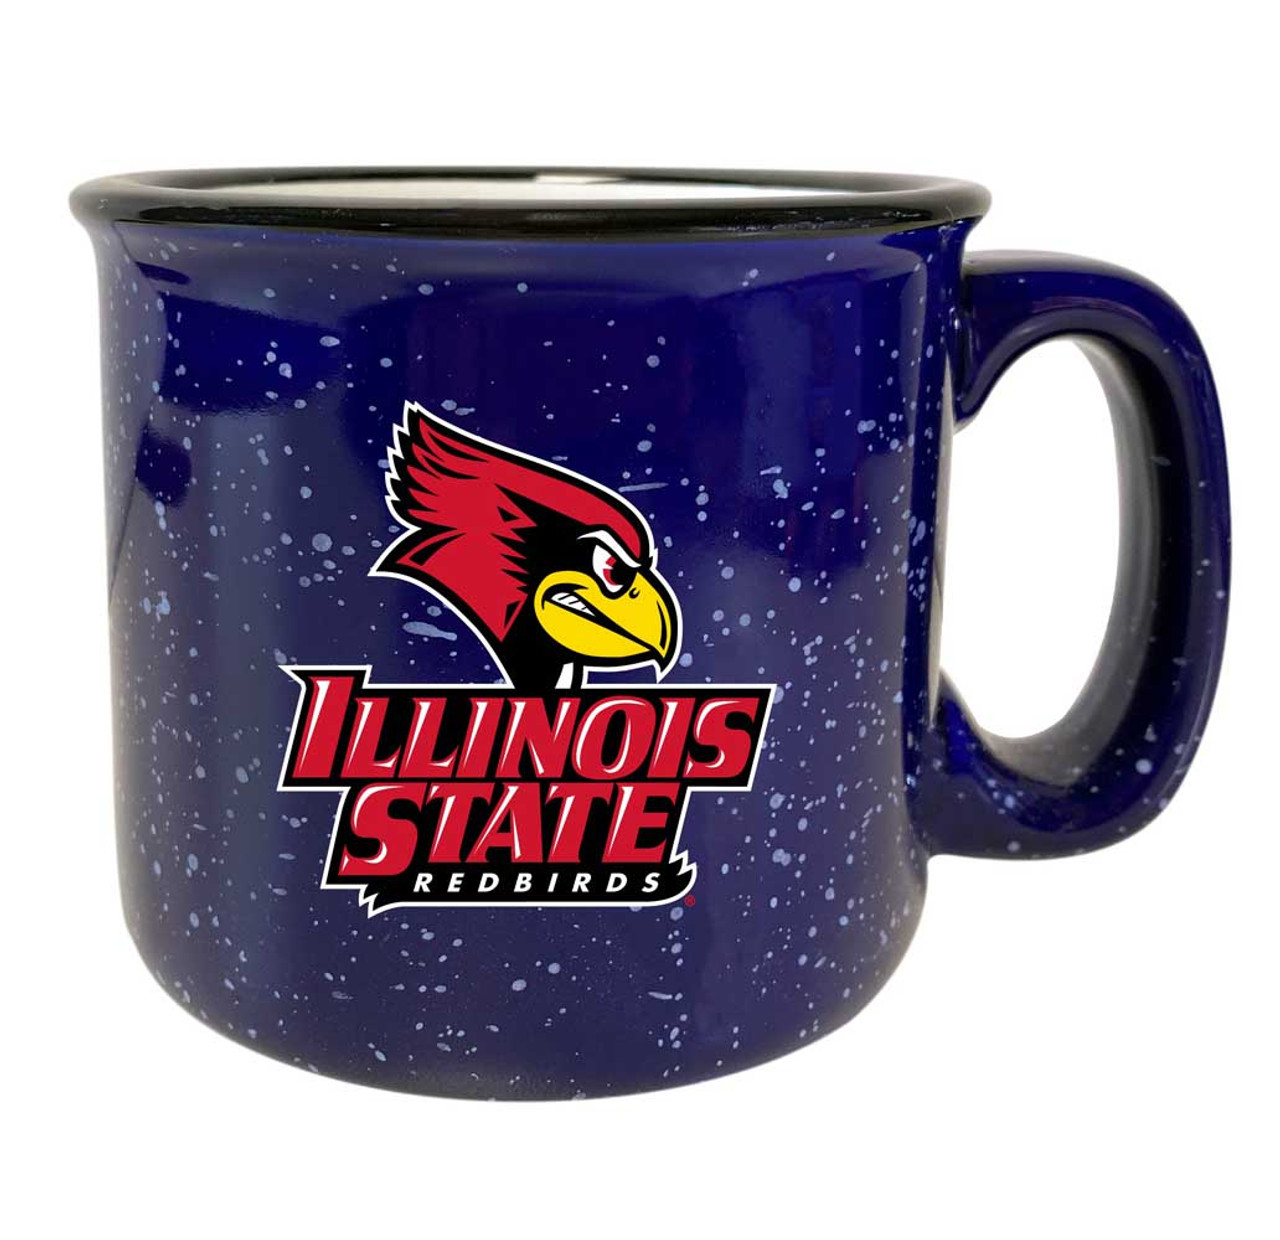 Illinois State Redbirds Colorbirds Speckled Ceramic Camper Coffee Mug (Choose Your Color).